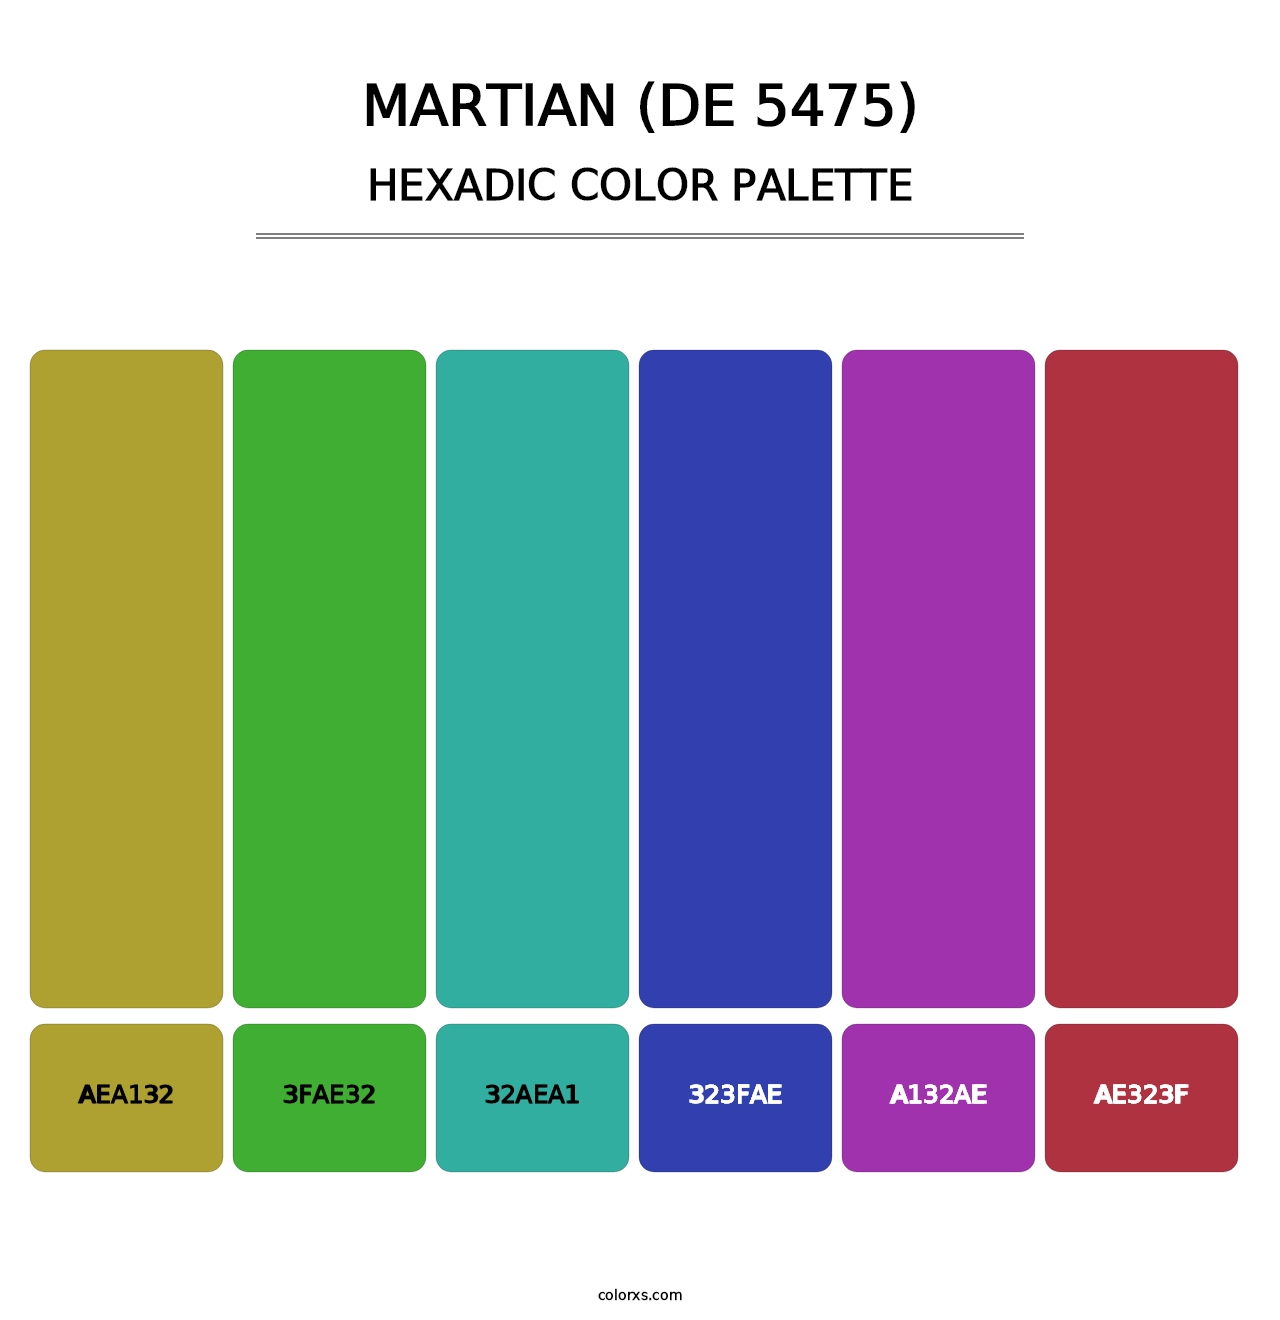 Martian (DE 5475) - Hexadic Color Palette